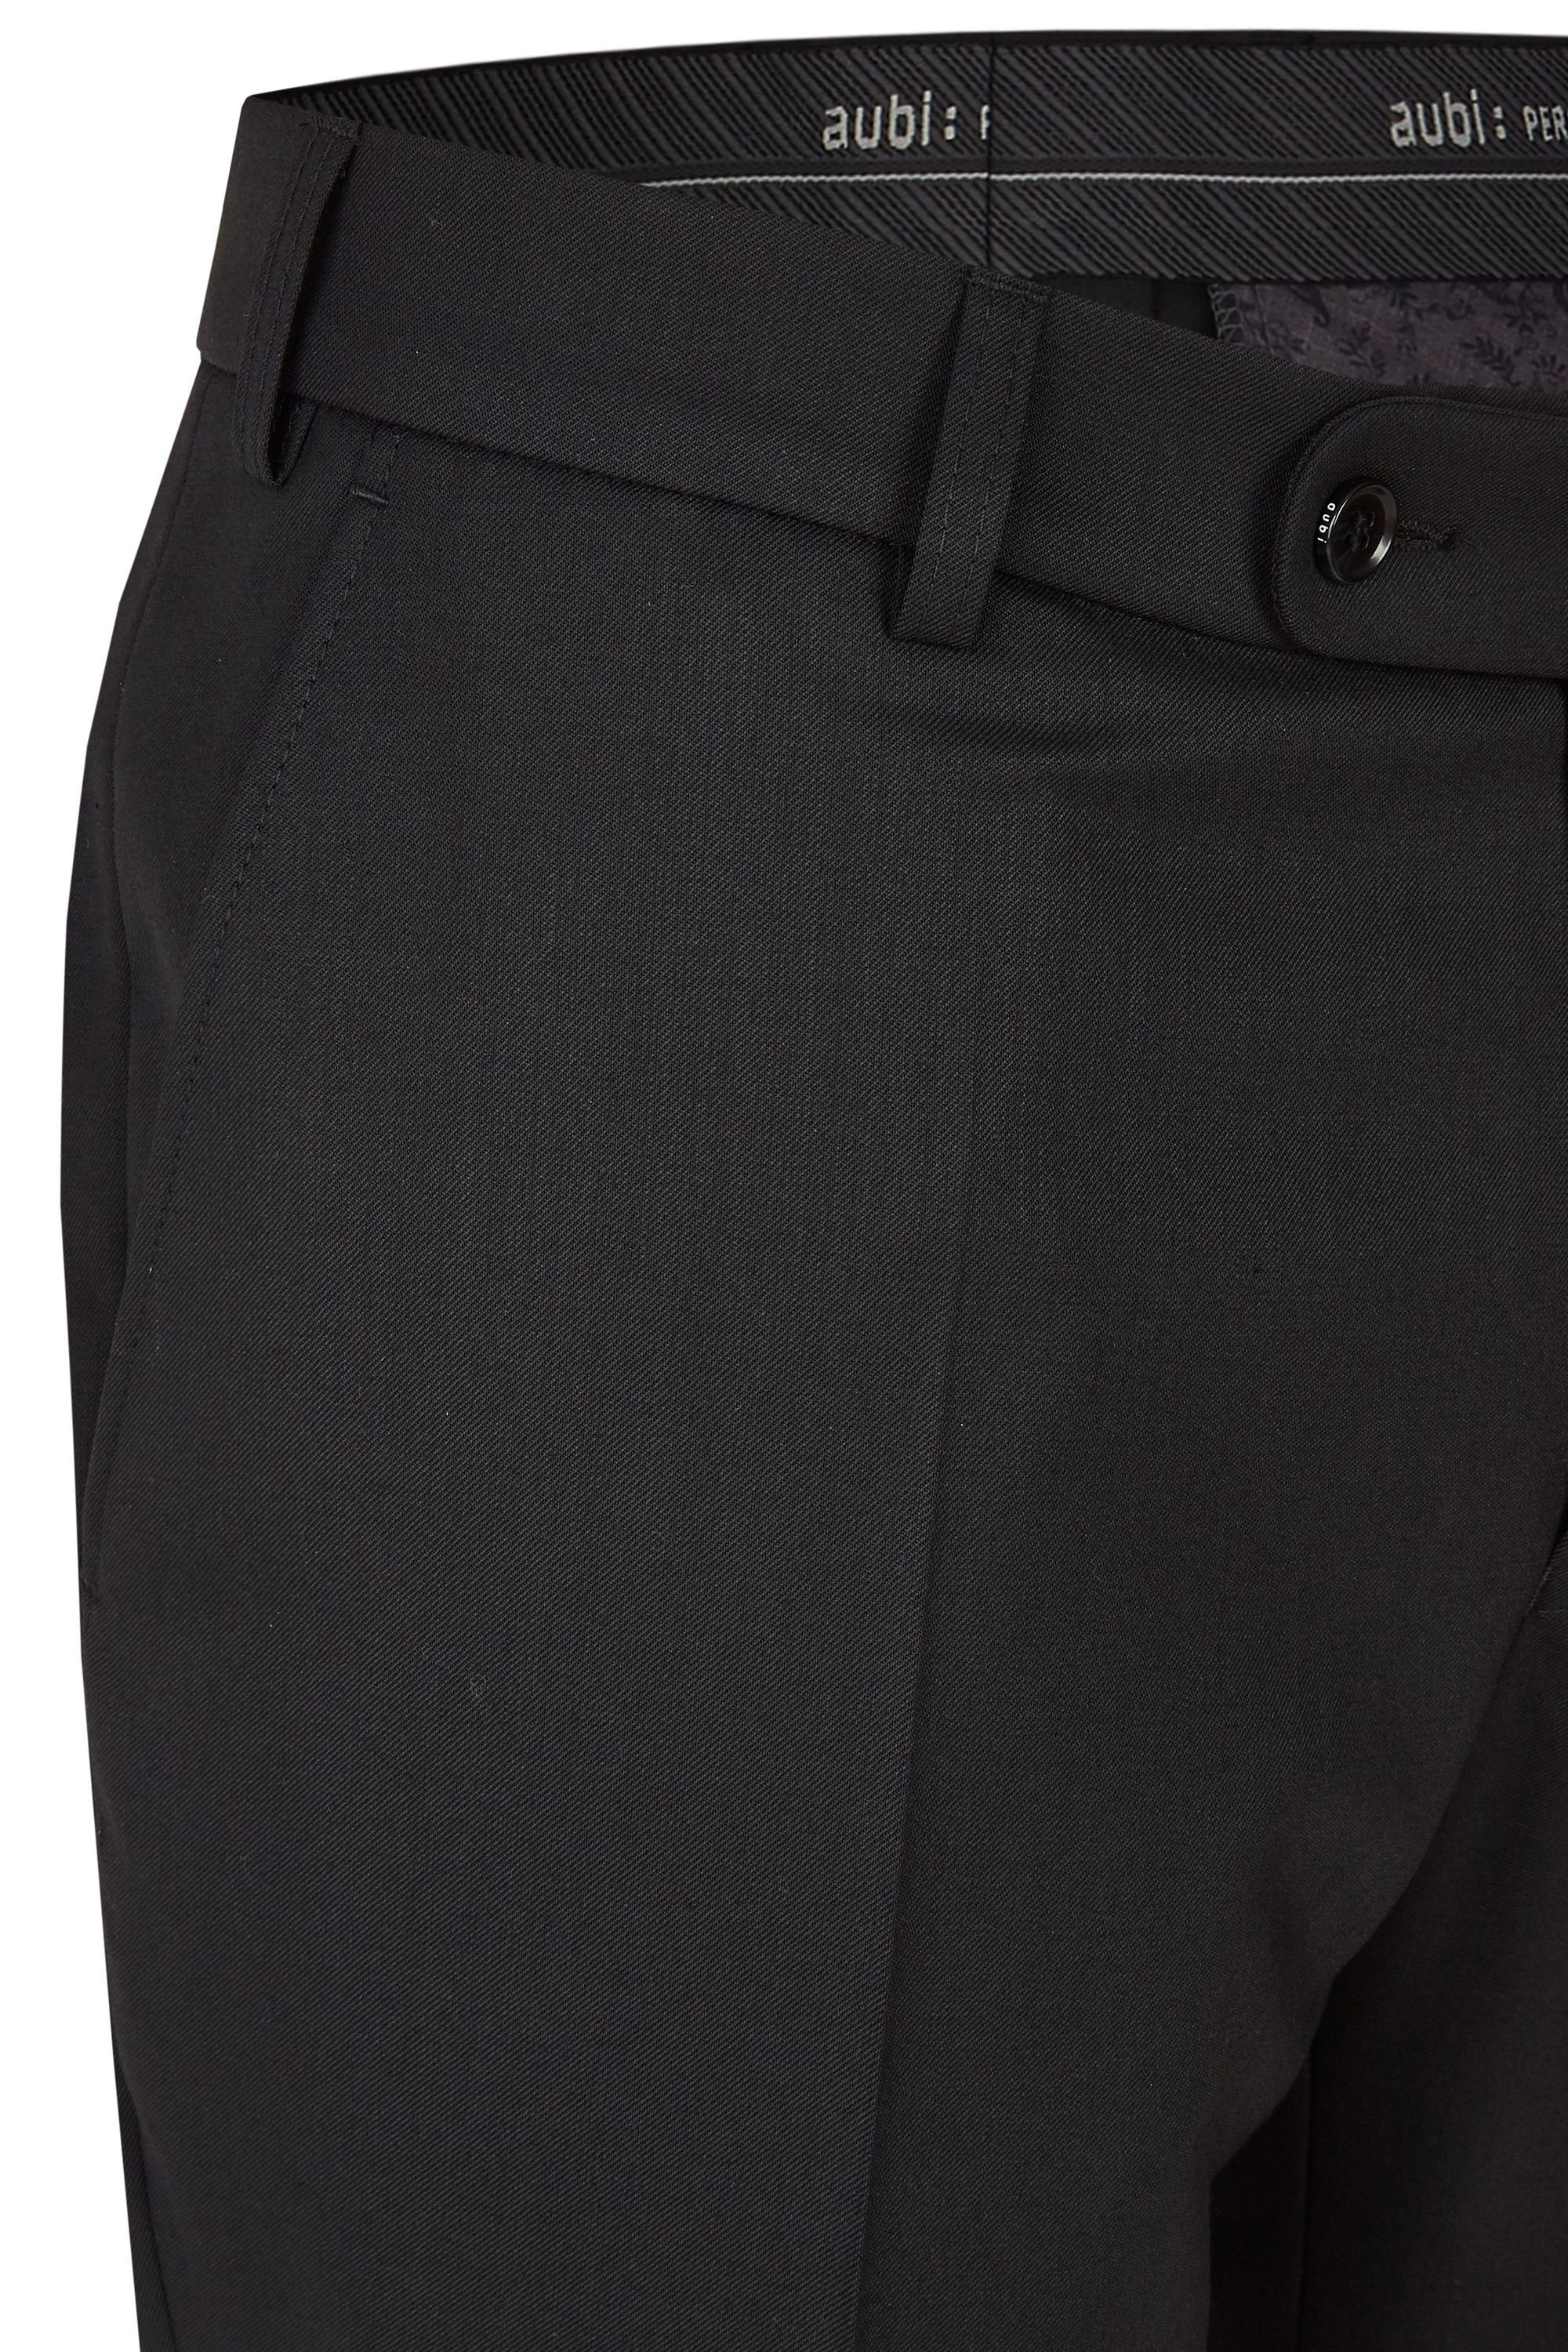 Anzughose schwarz Stoffhose Front Flat Herren (50) aubi: Perfect aubi Fit Businesshose Modell 26